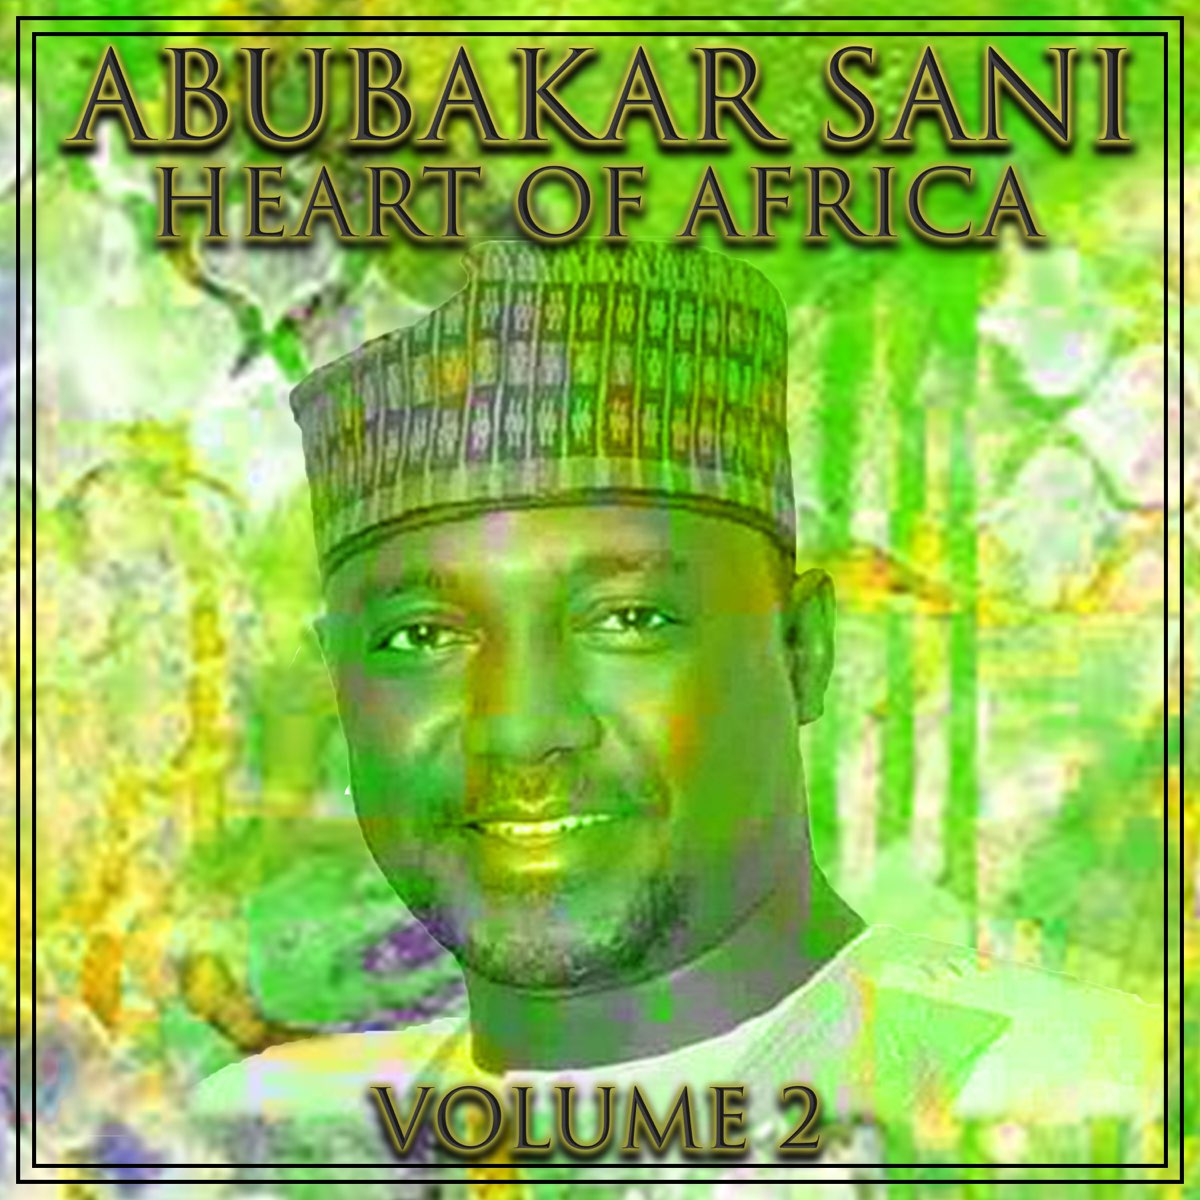 Heart of Africa, Vol. 2 by Abubakar Sani on Apple Music